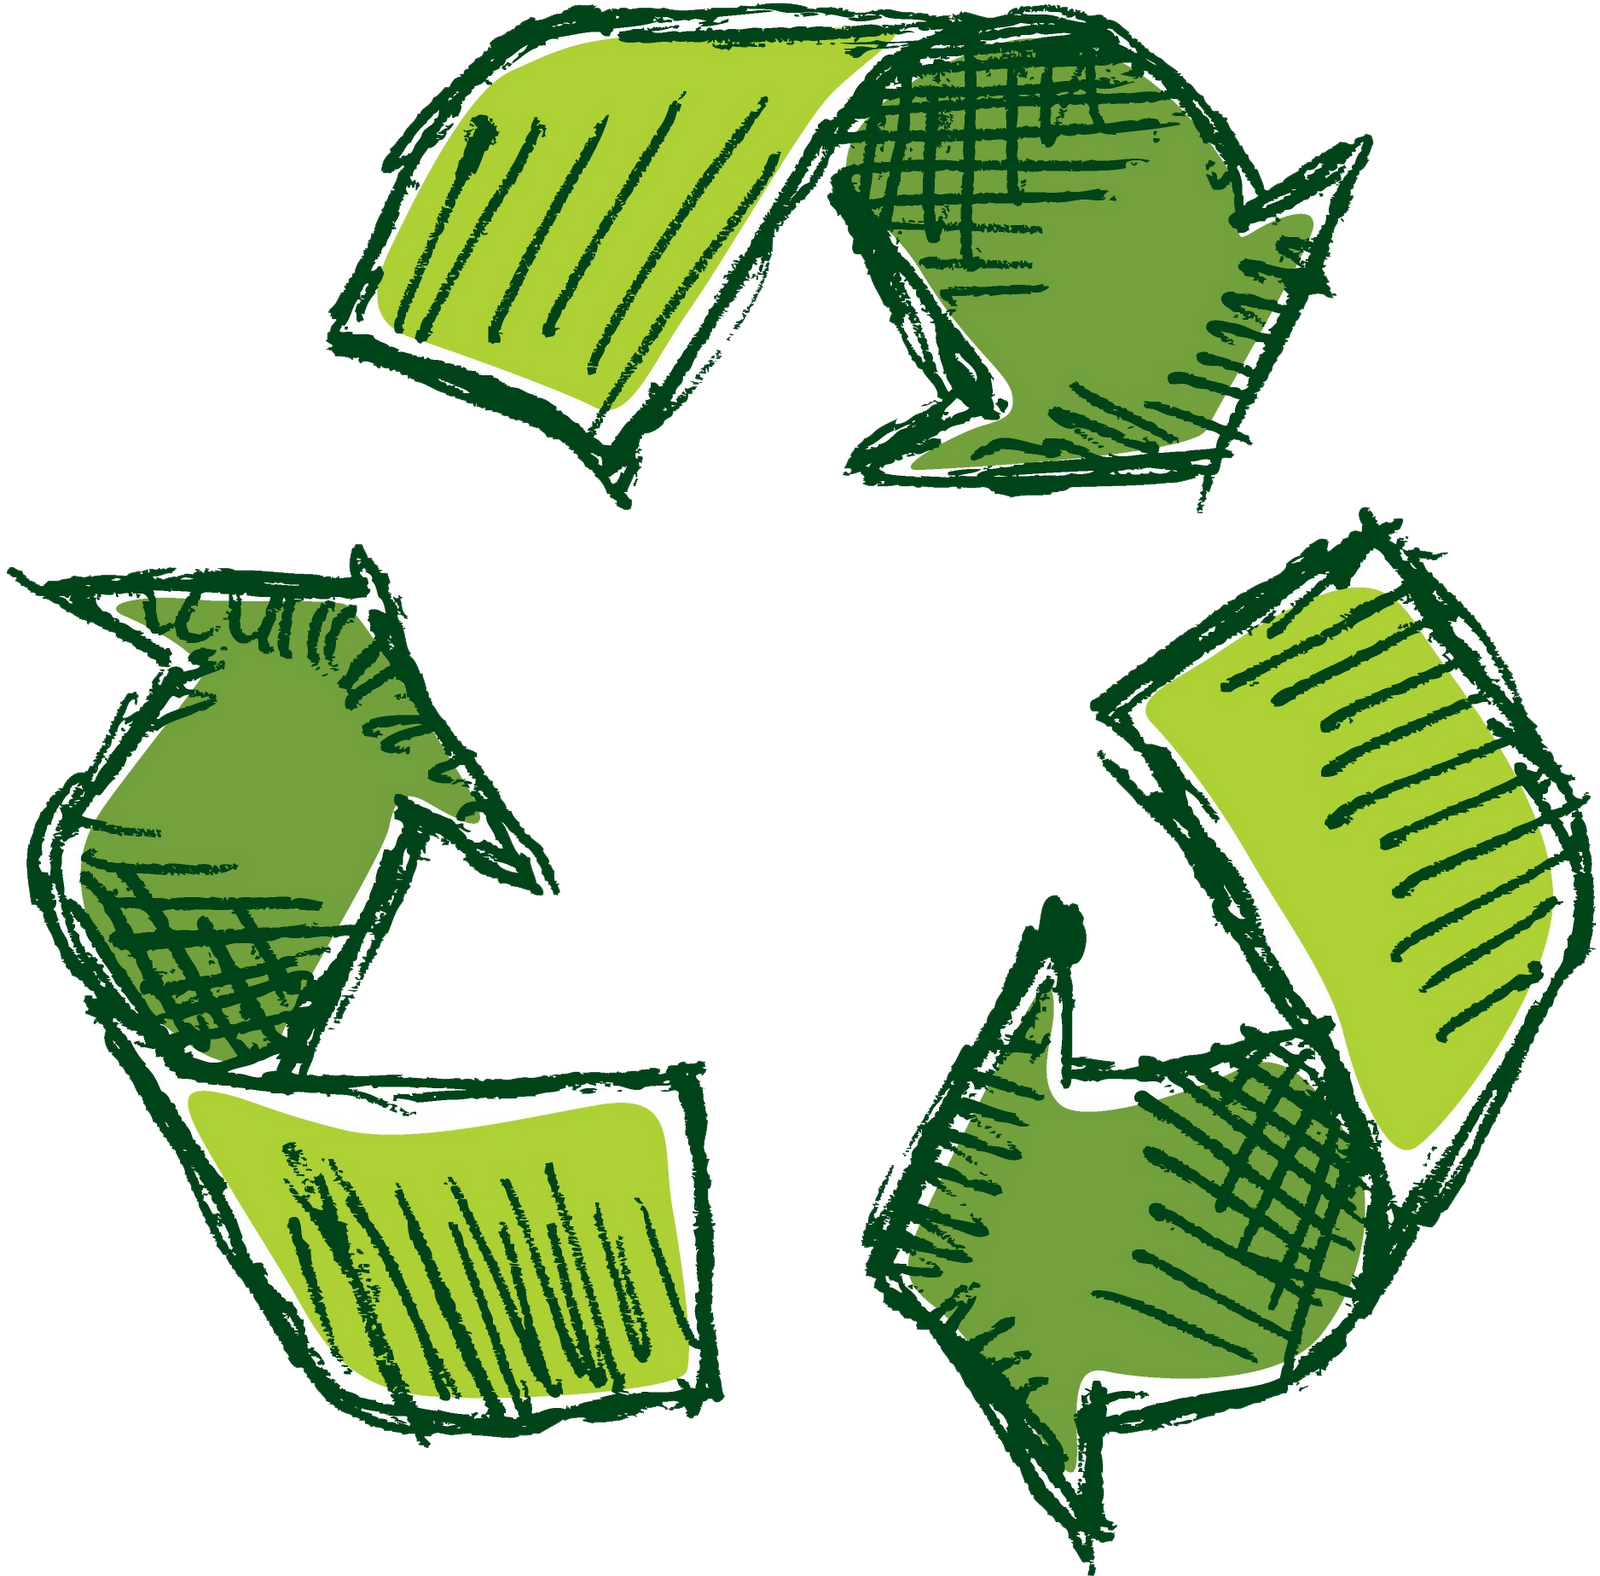 Light green recycling symbol